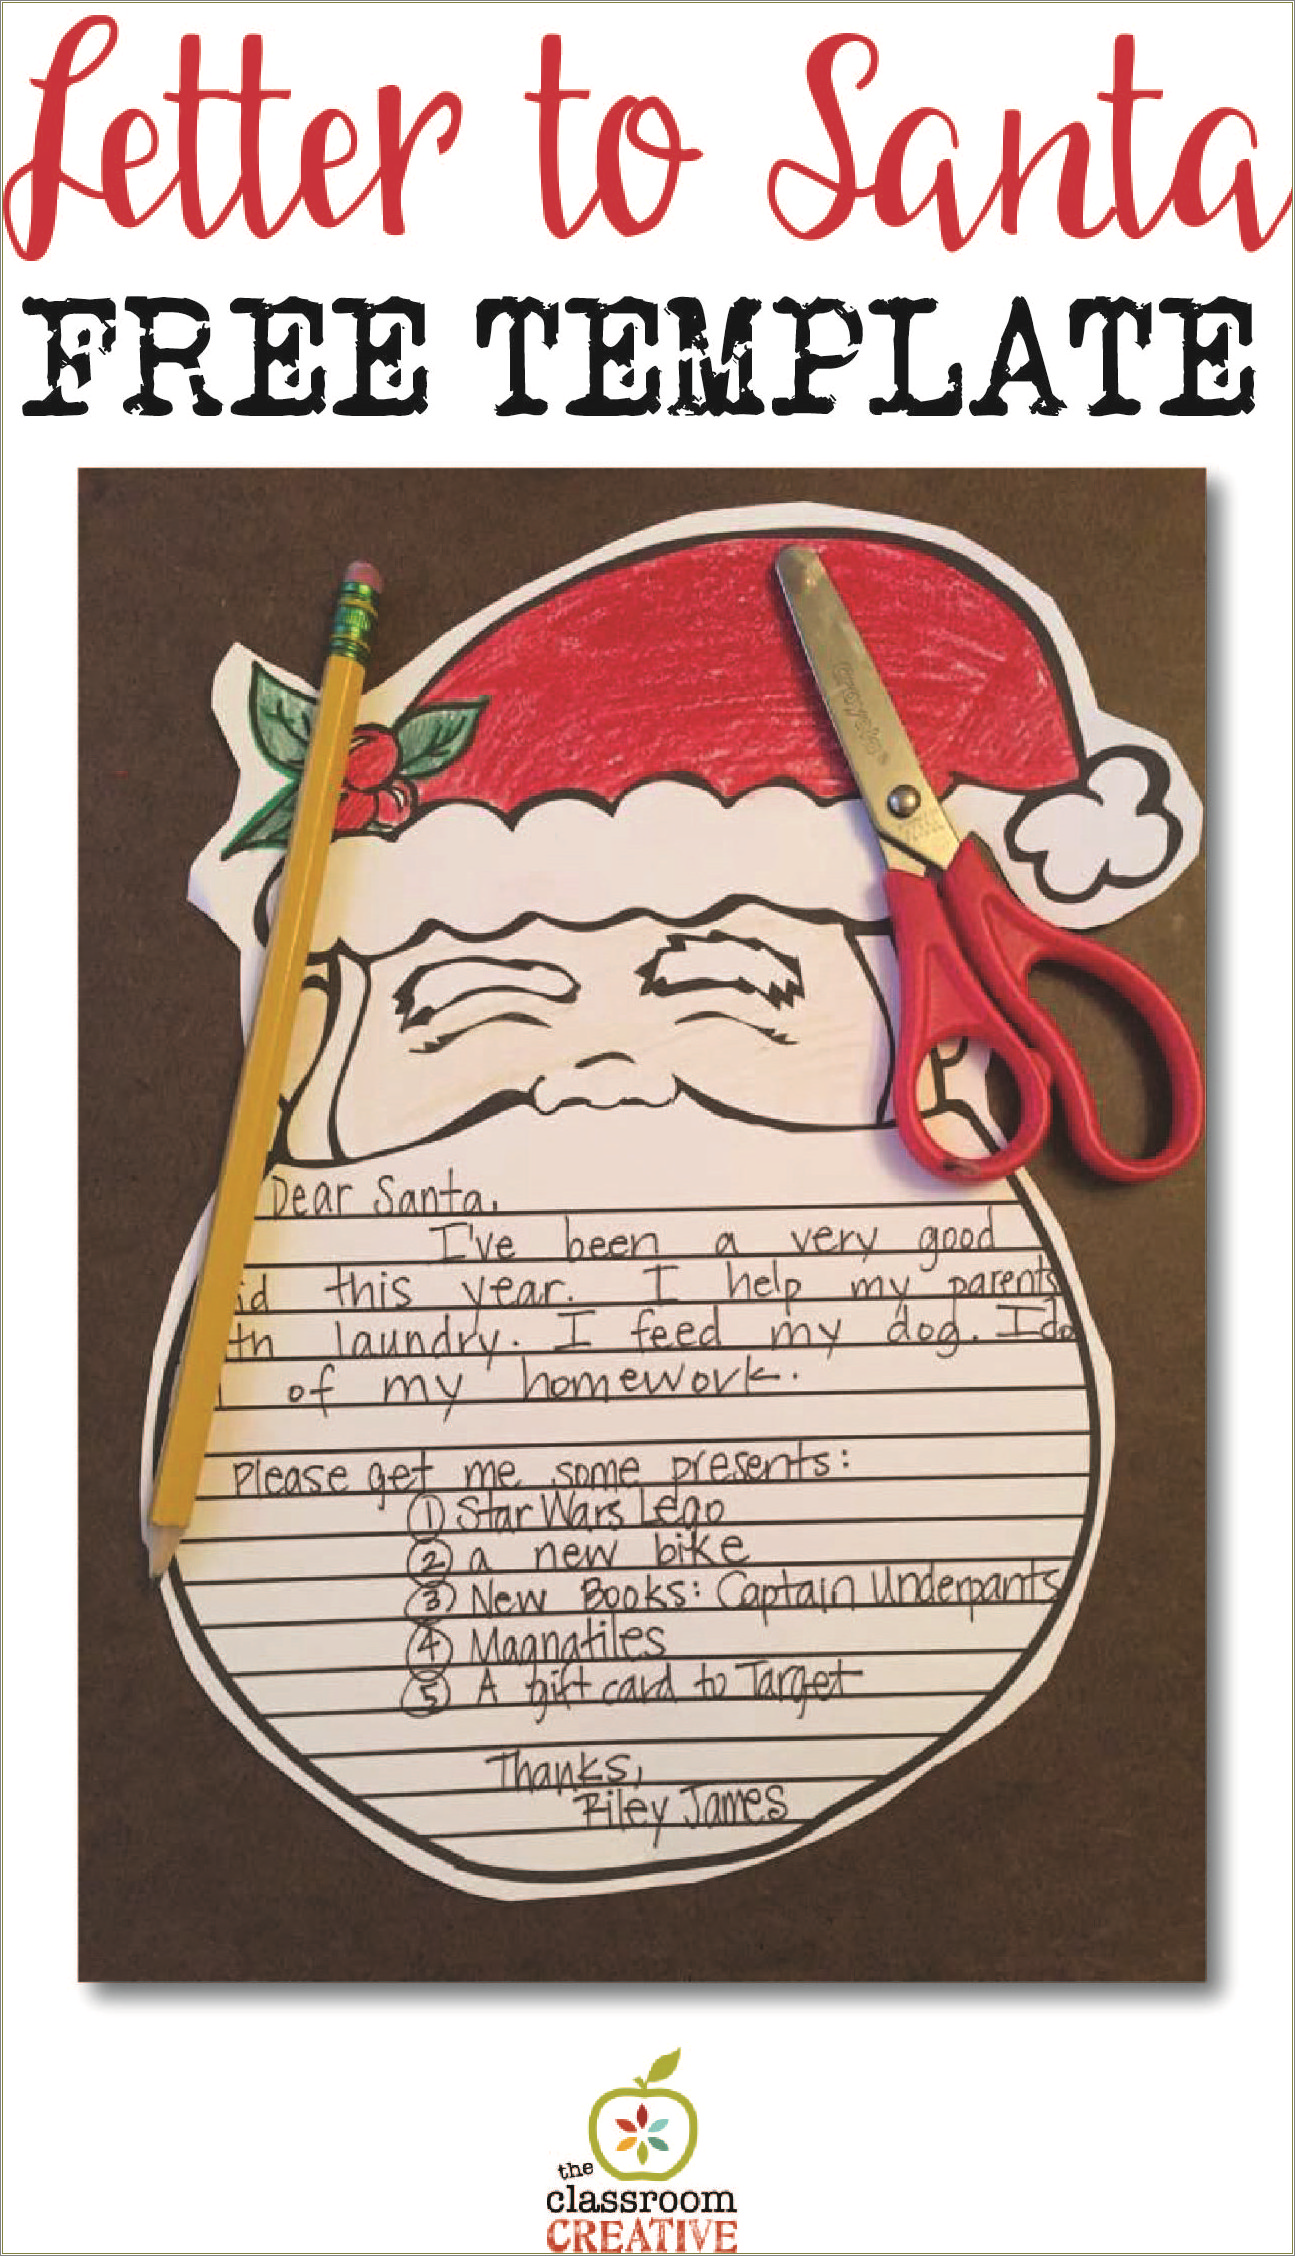 Letters To Santa 2016 Templates Free Printable